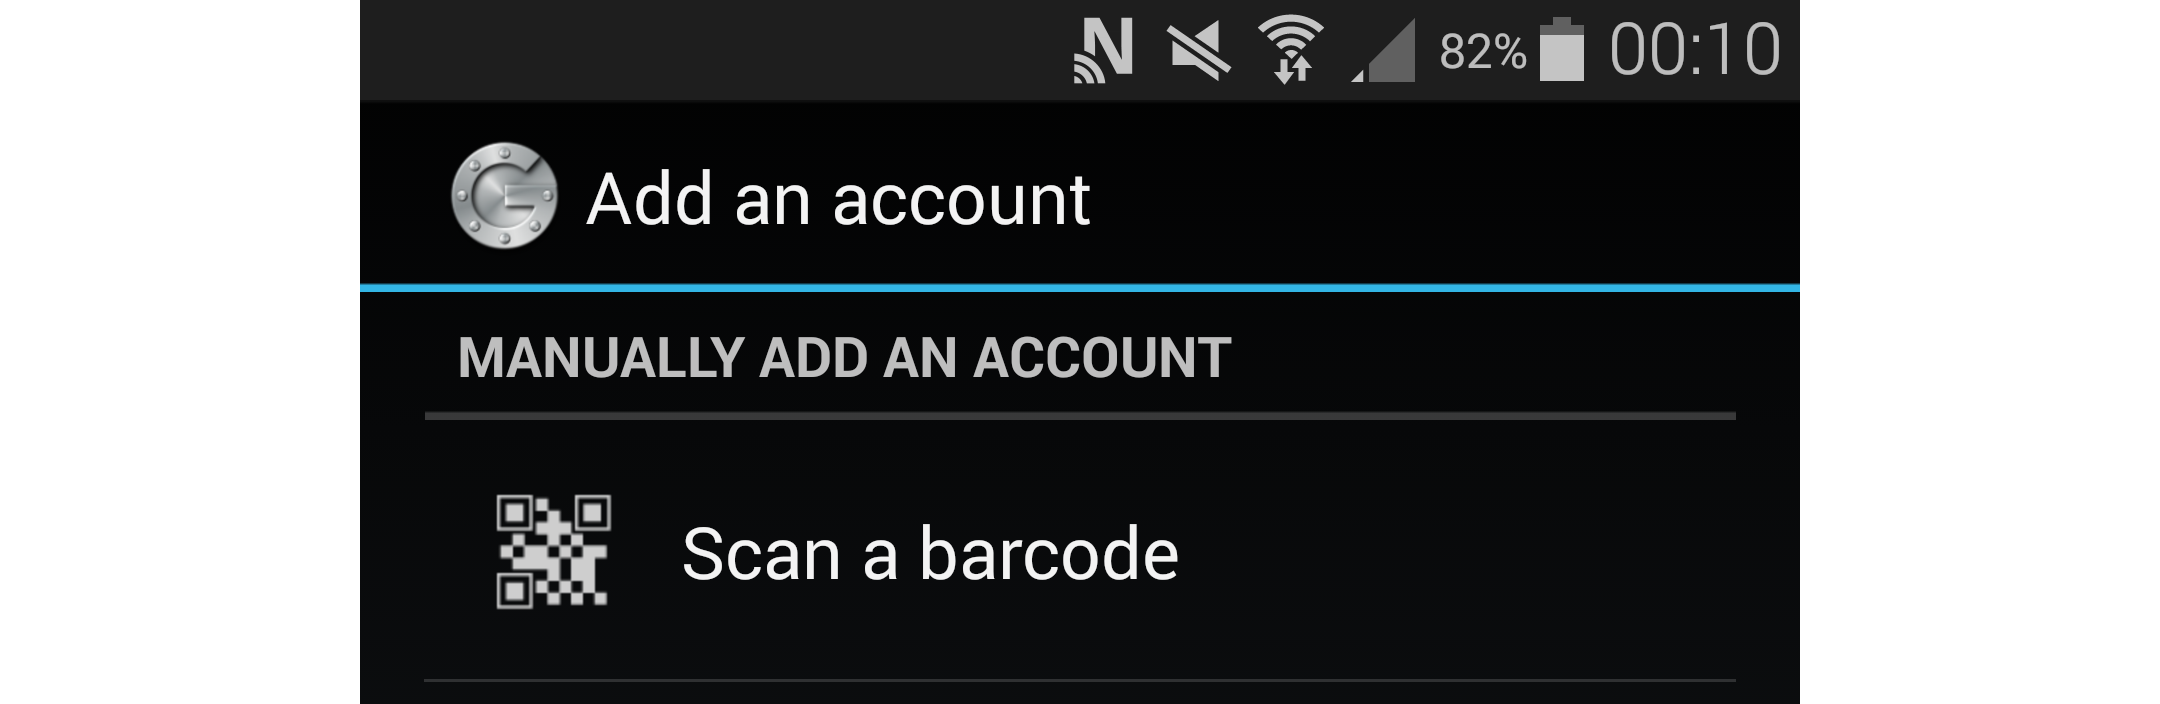 Google Authenticator Scan Barcode Menu